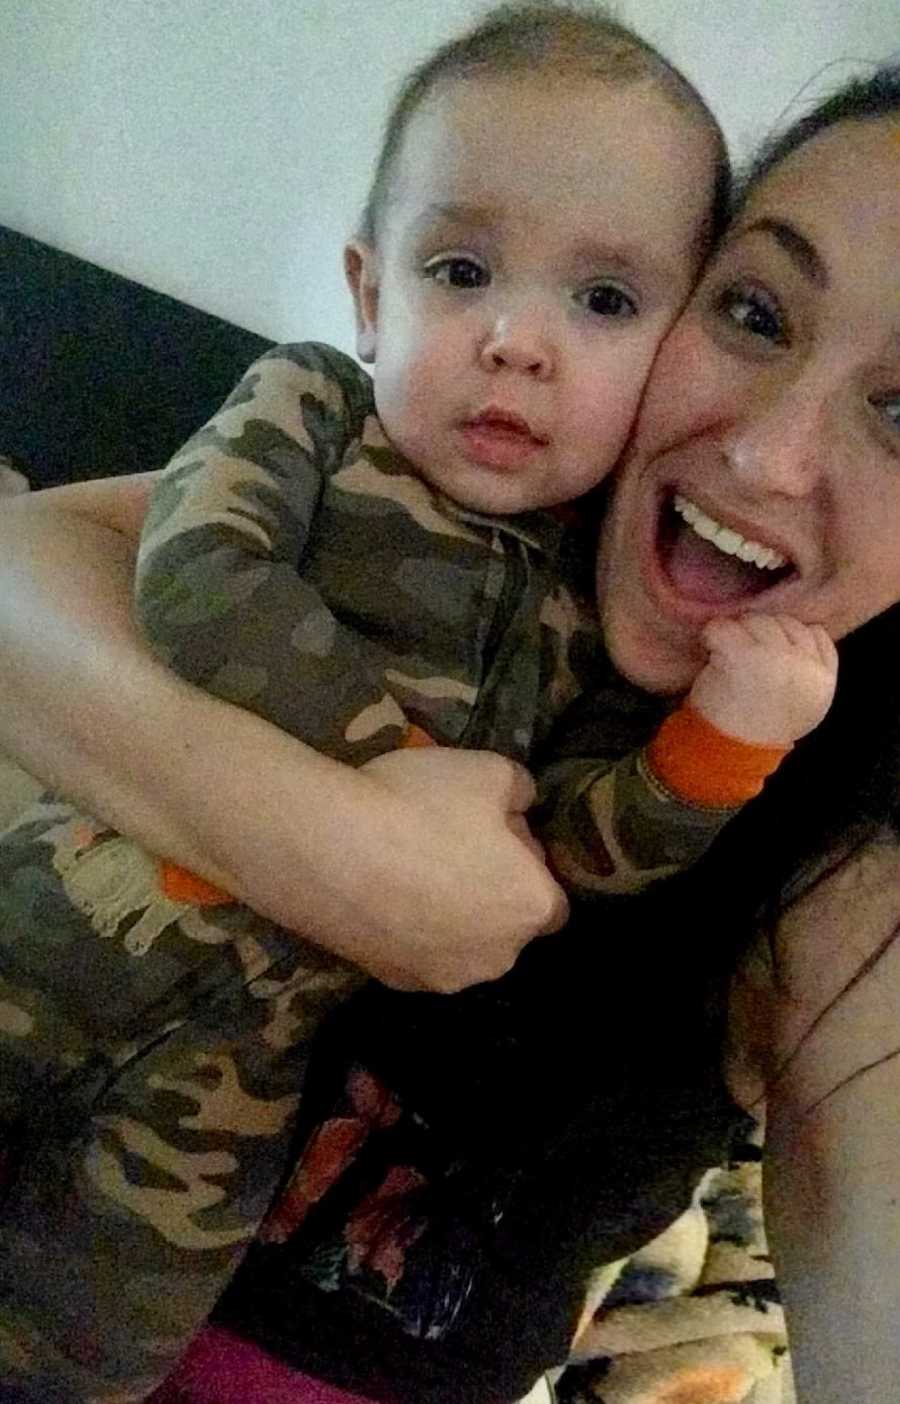 Mother smiles in selfie holding baby son in camo onesie in her arm